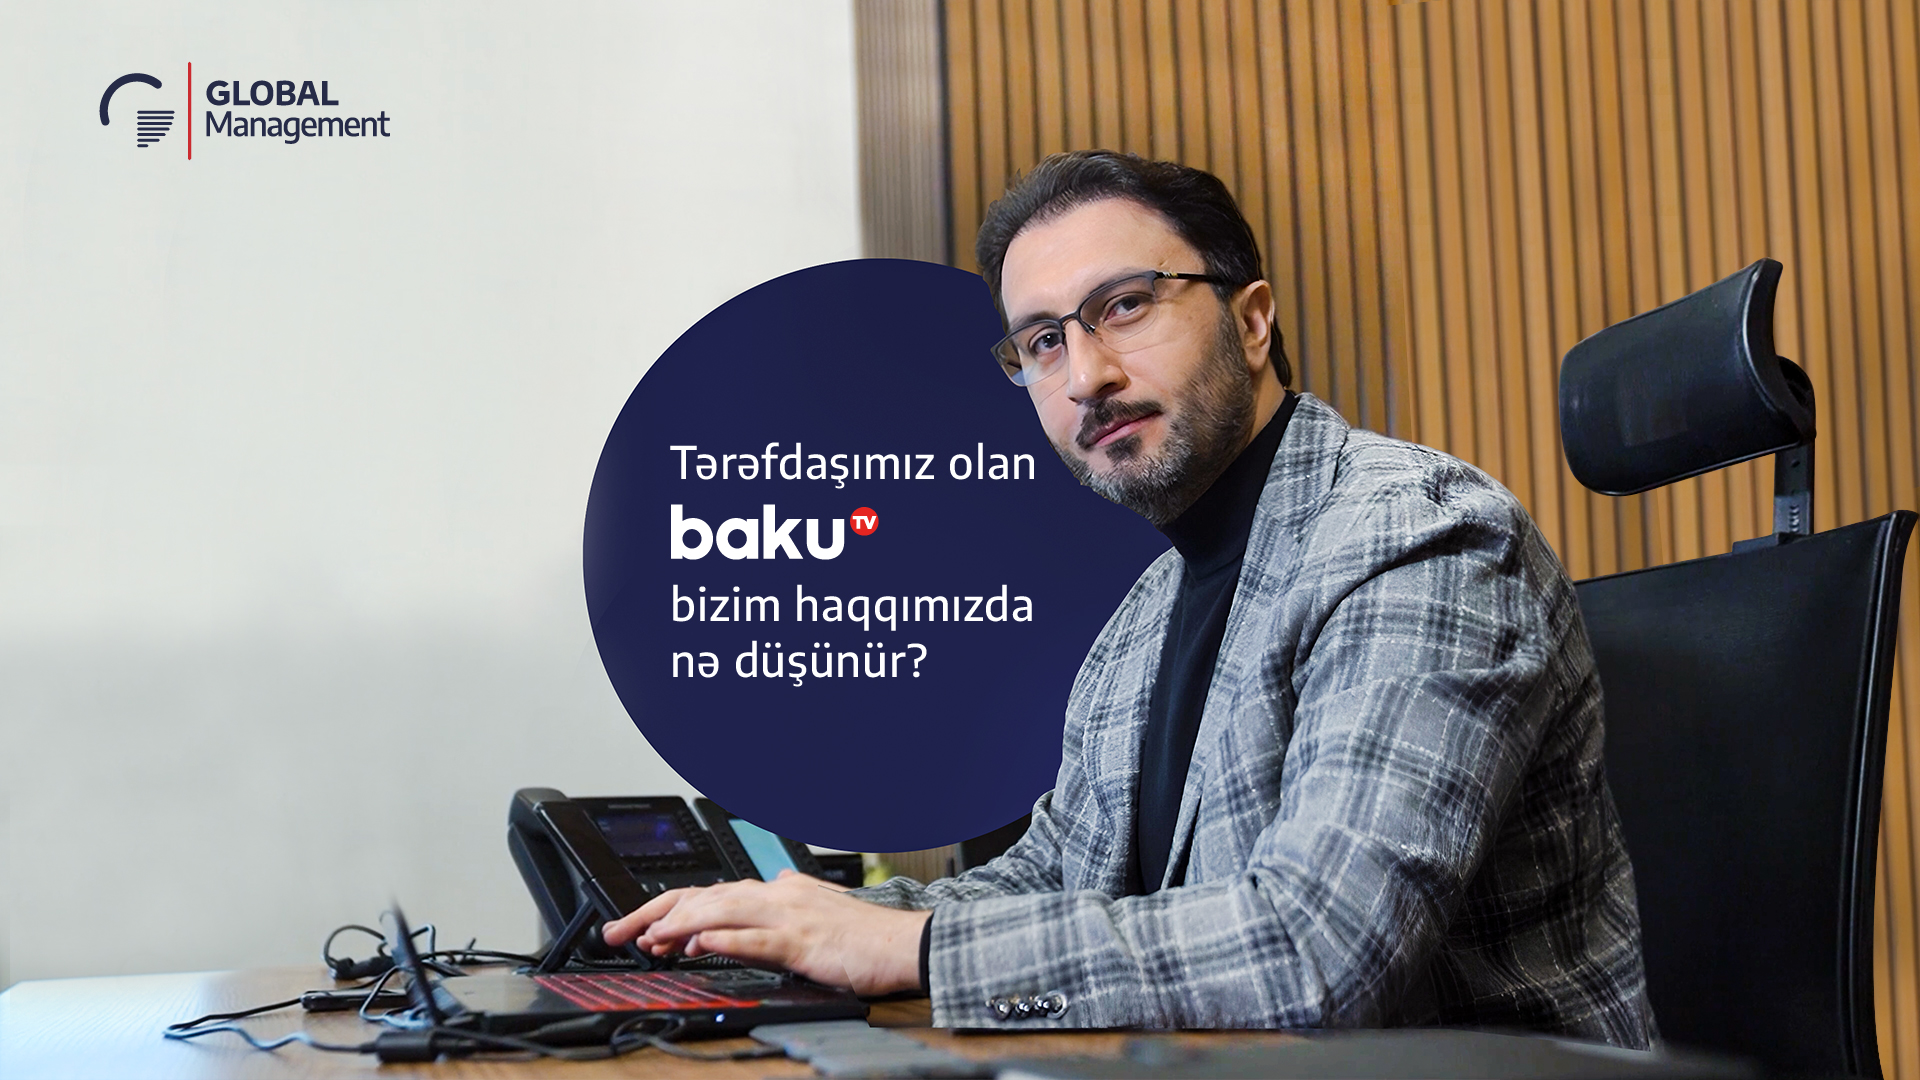 Ramin Jafarov: Director of Baku TV